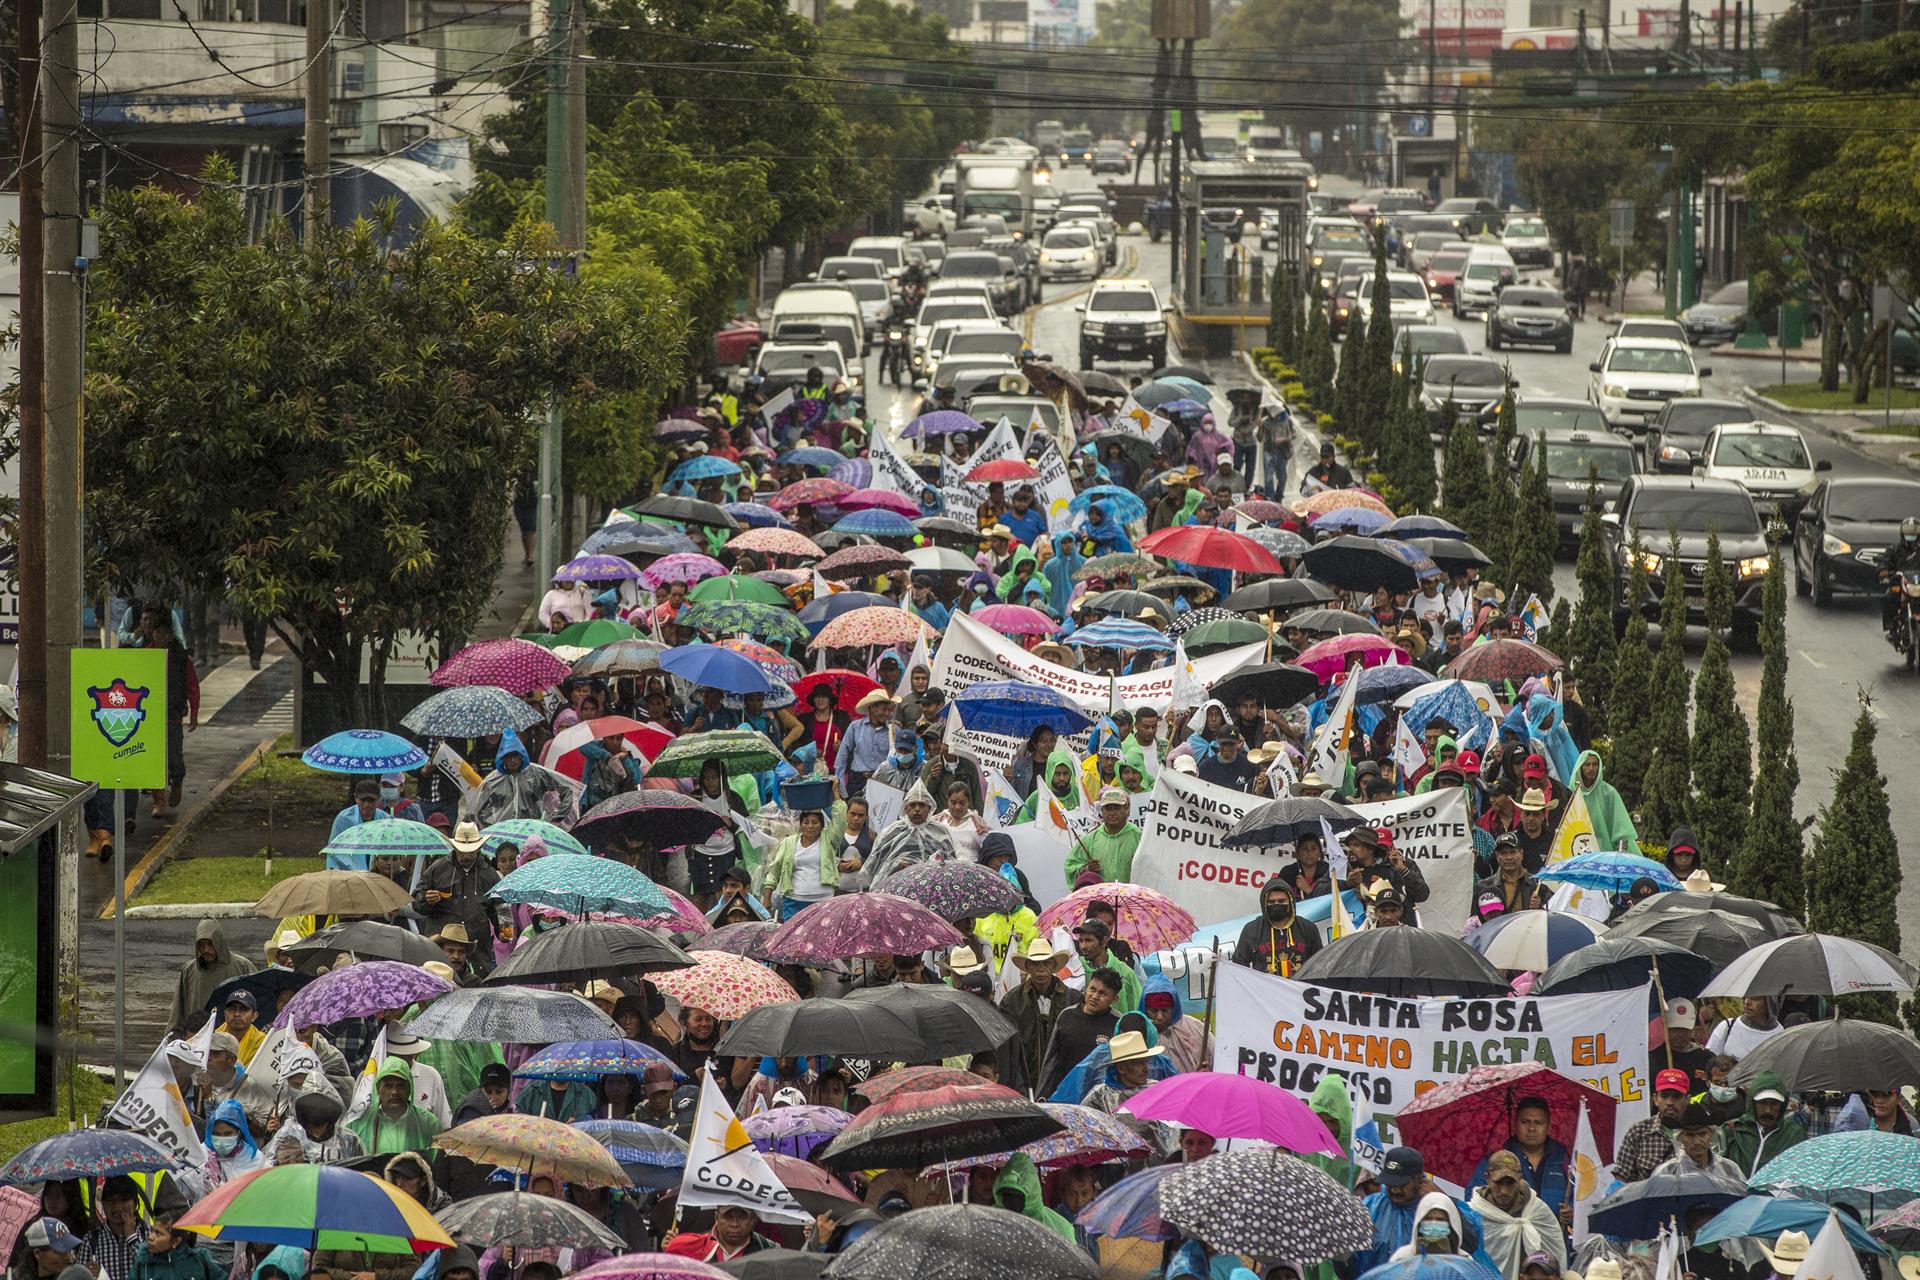 marcha campesinos guatemala corrupcion